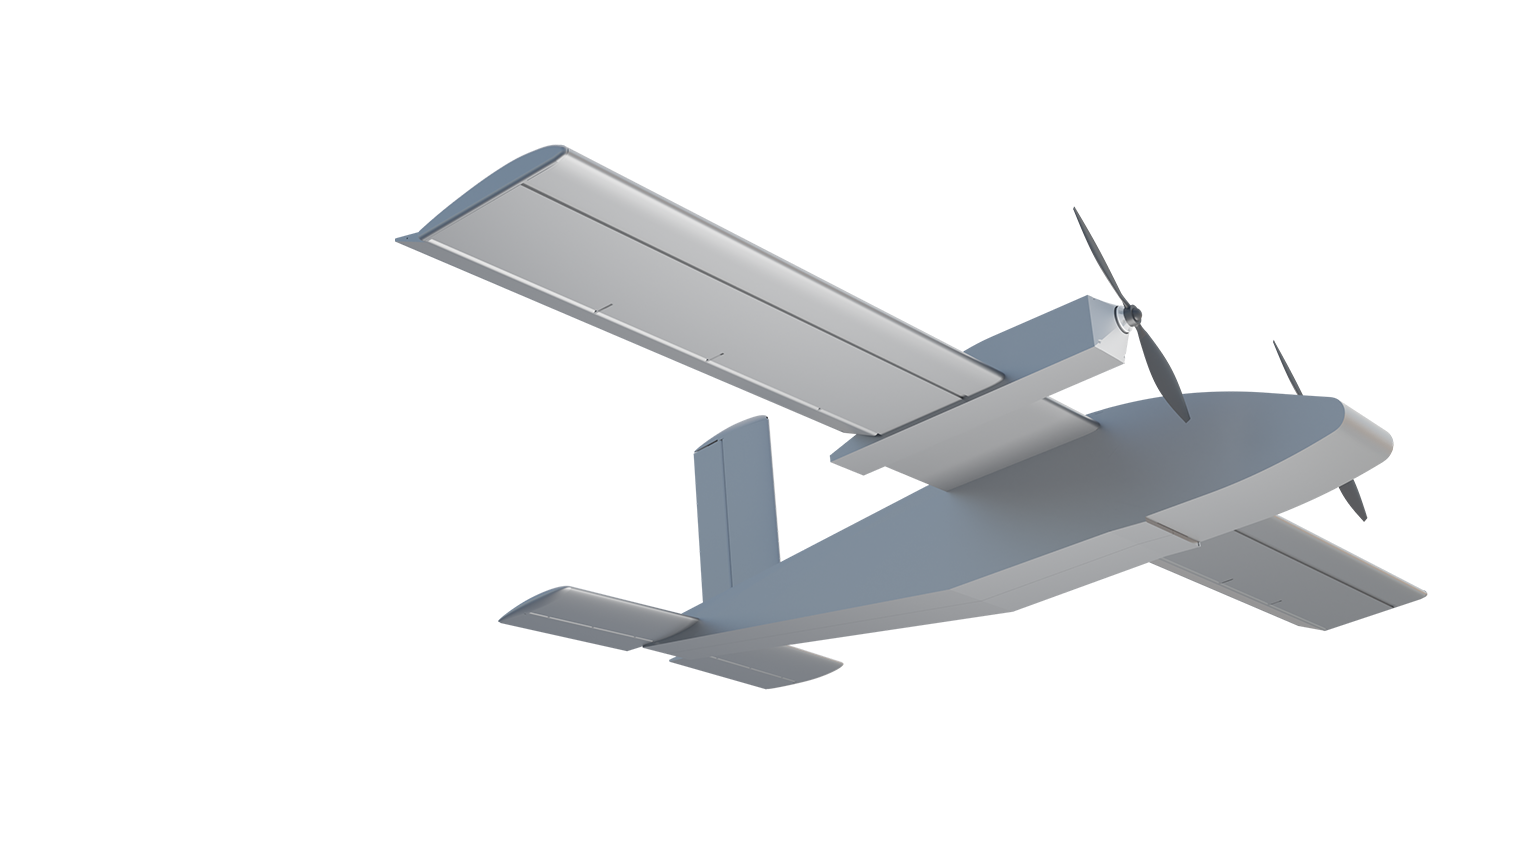 Highly maneuverable UAV VIDSICH